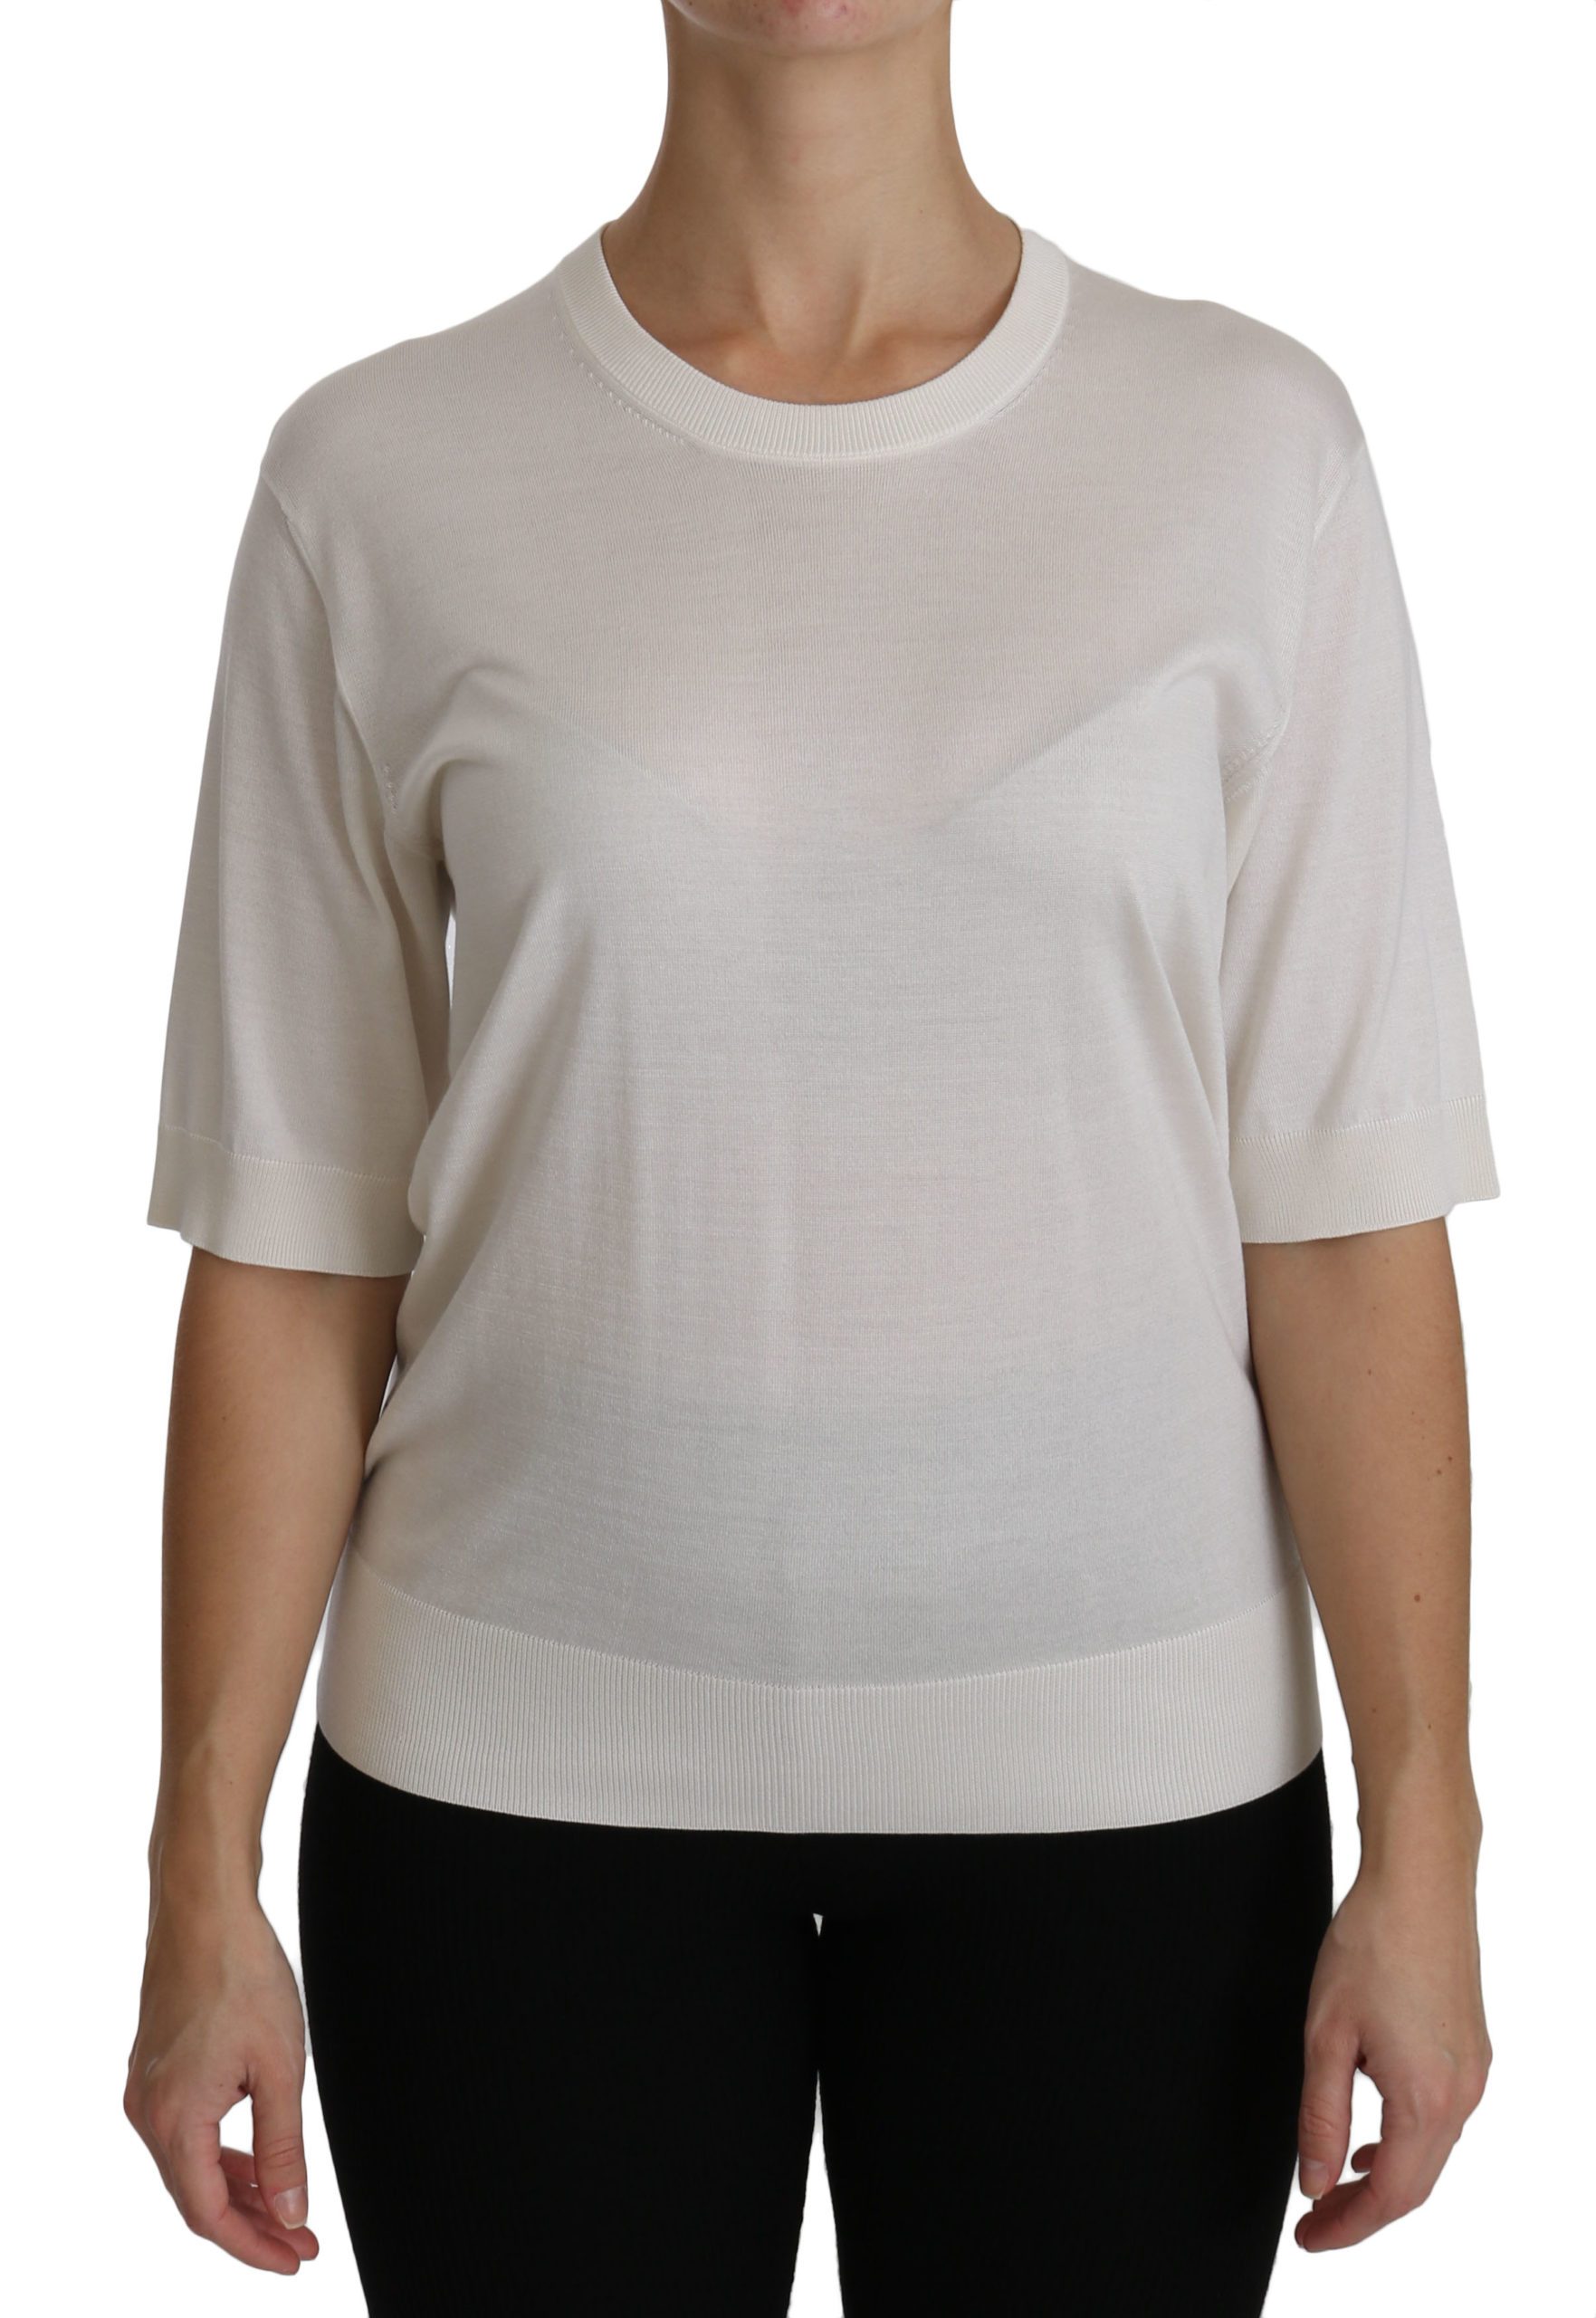 Dolce & Gabbana Women's Crew Neck Short Sleeve Top White TSH4265 - IT40|S